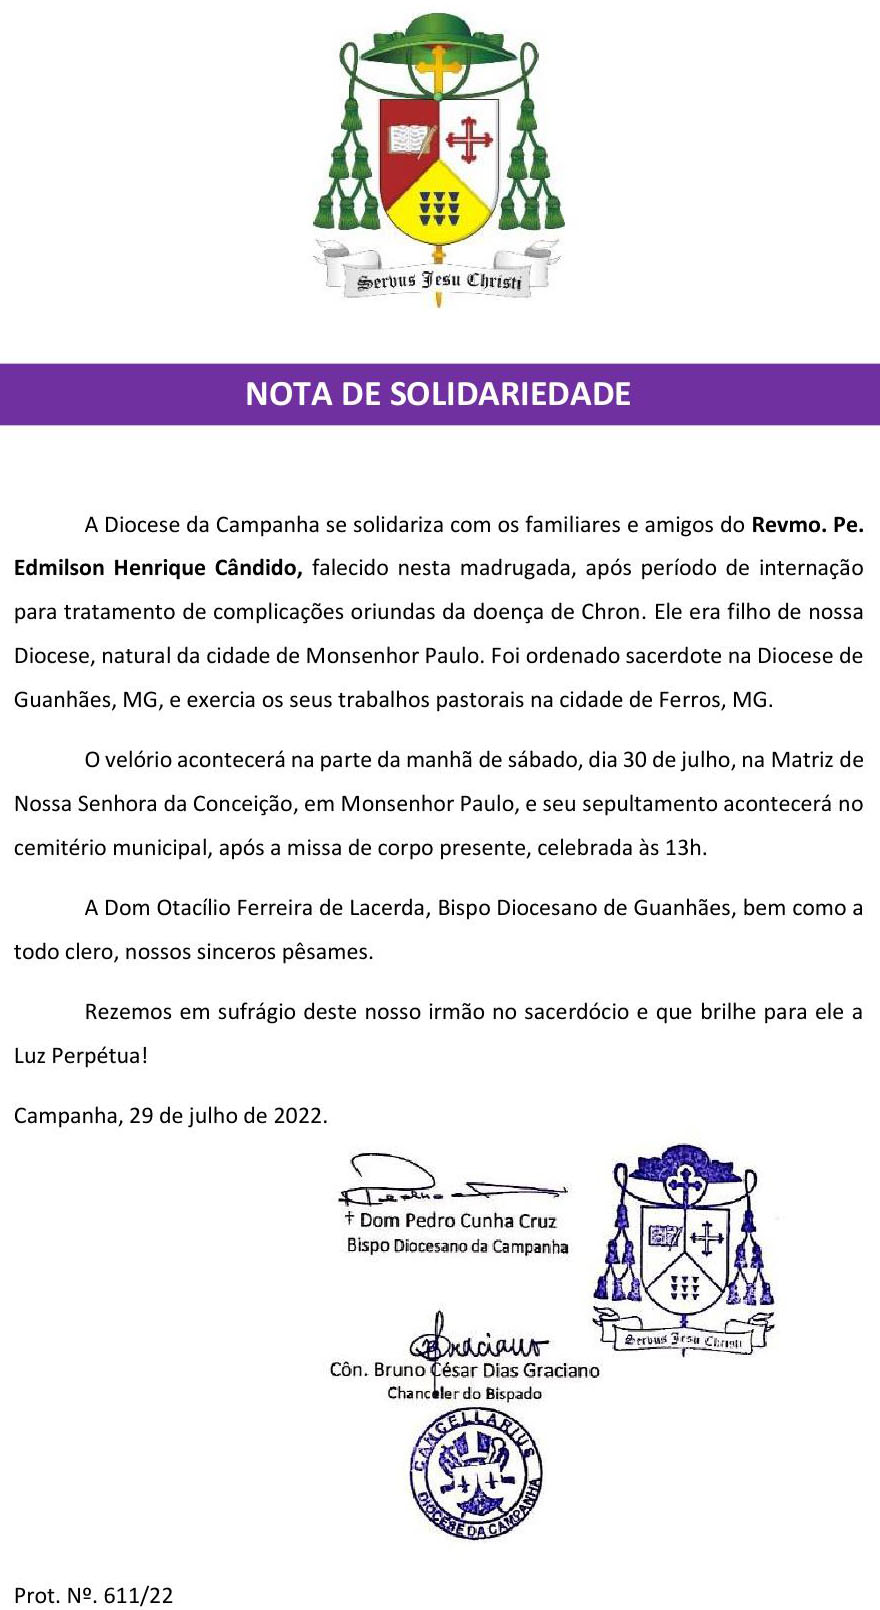 Diocese da Campanha - Nota de Solidariedade - Pe. Edmilson Henrique Candido